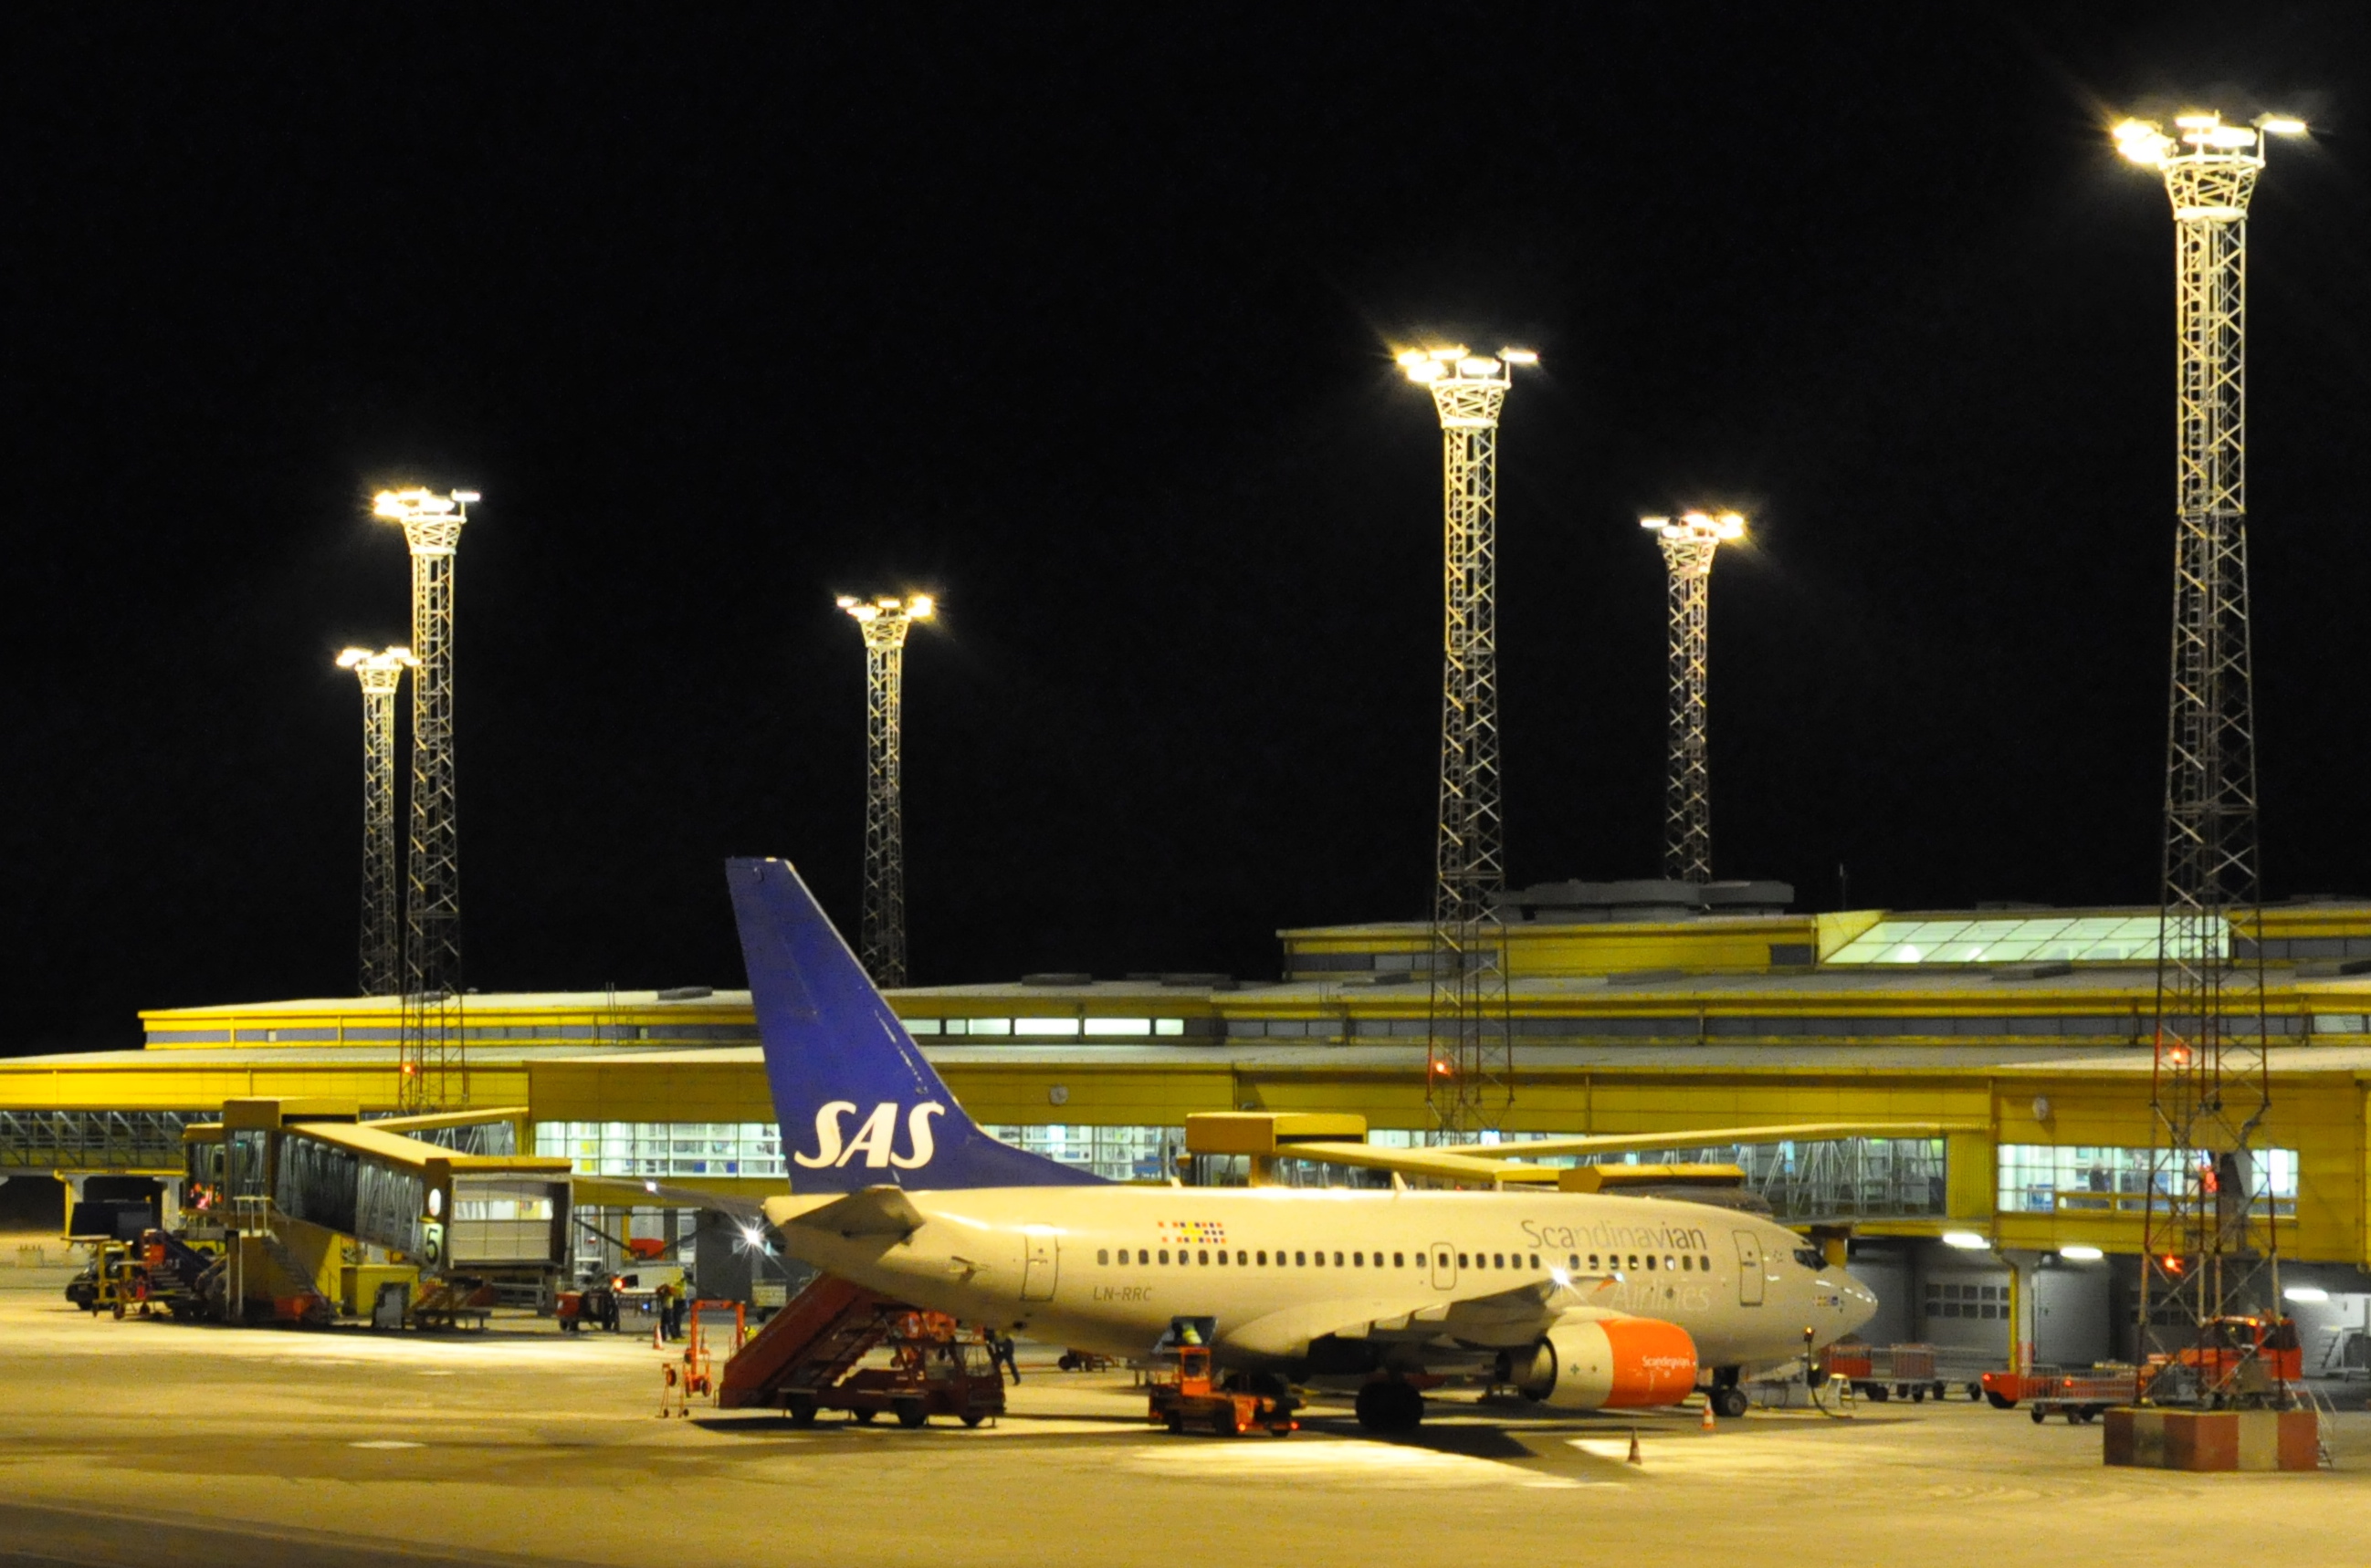 File:Sturup Airport by night.jpg - Wikimedia Commons